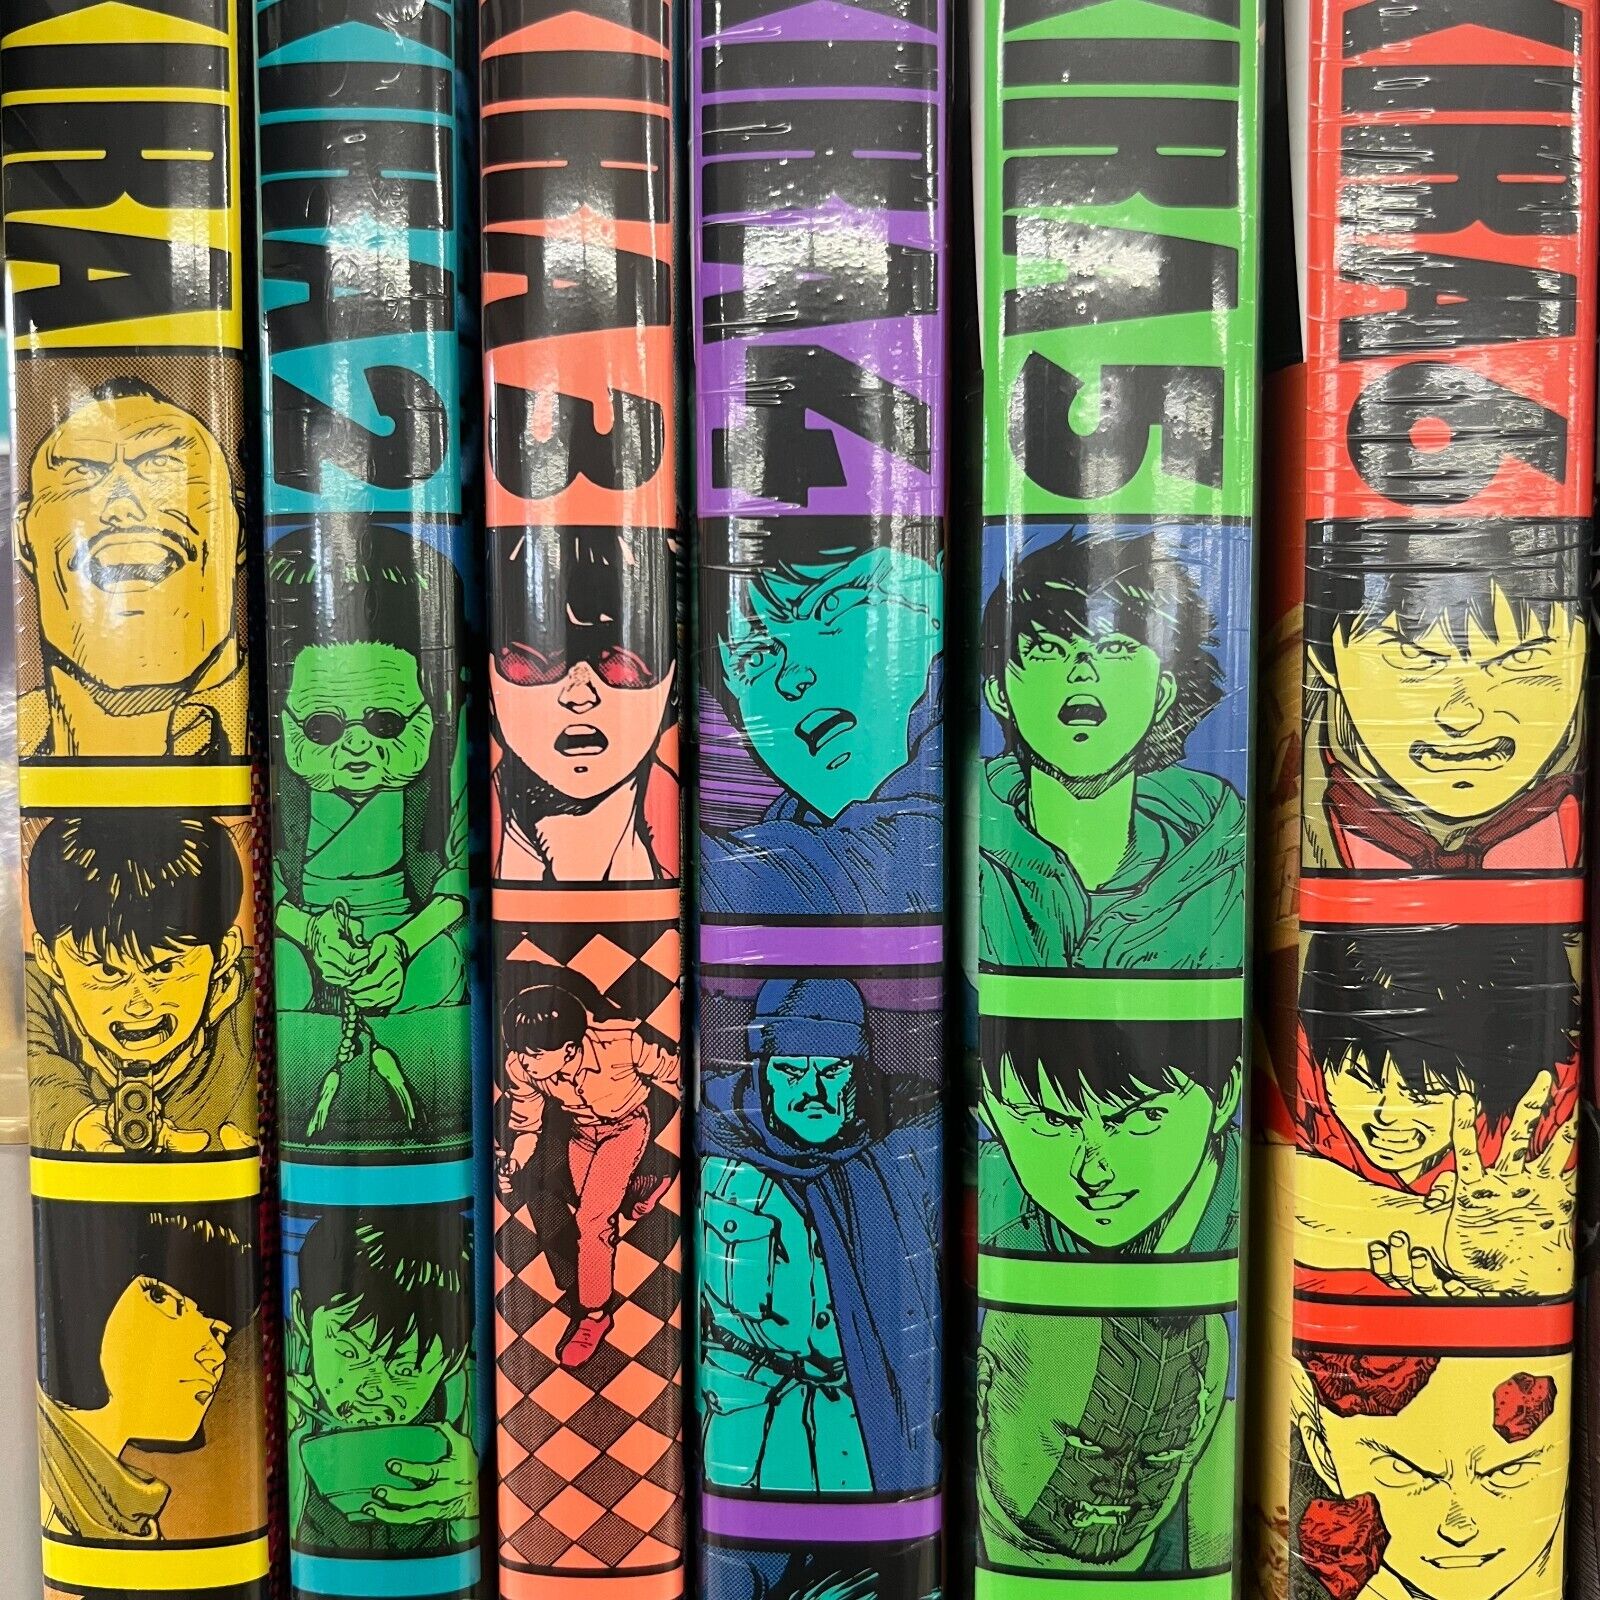 AKIRA Complete Set Vol. 1-6 Manga by Katsuhiro Otomo - Japanese Edition NEW